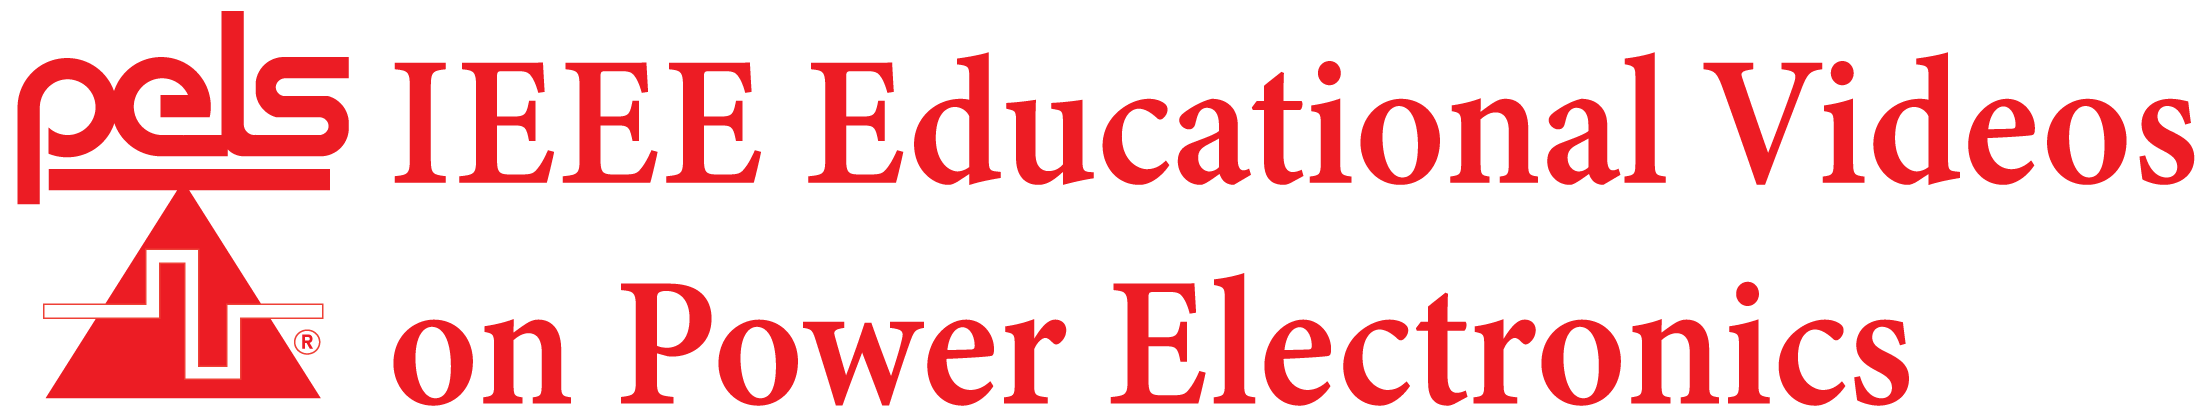 IEEE Educational Videos on Power Electronics Logo